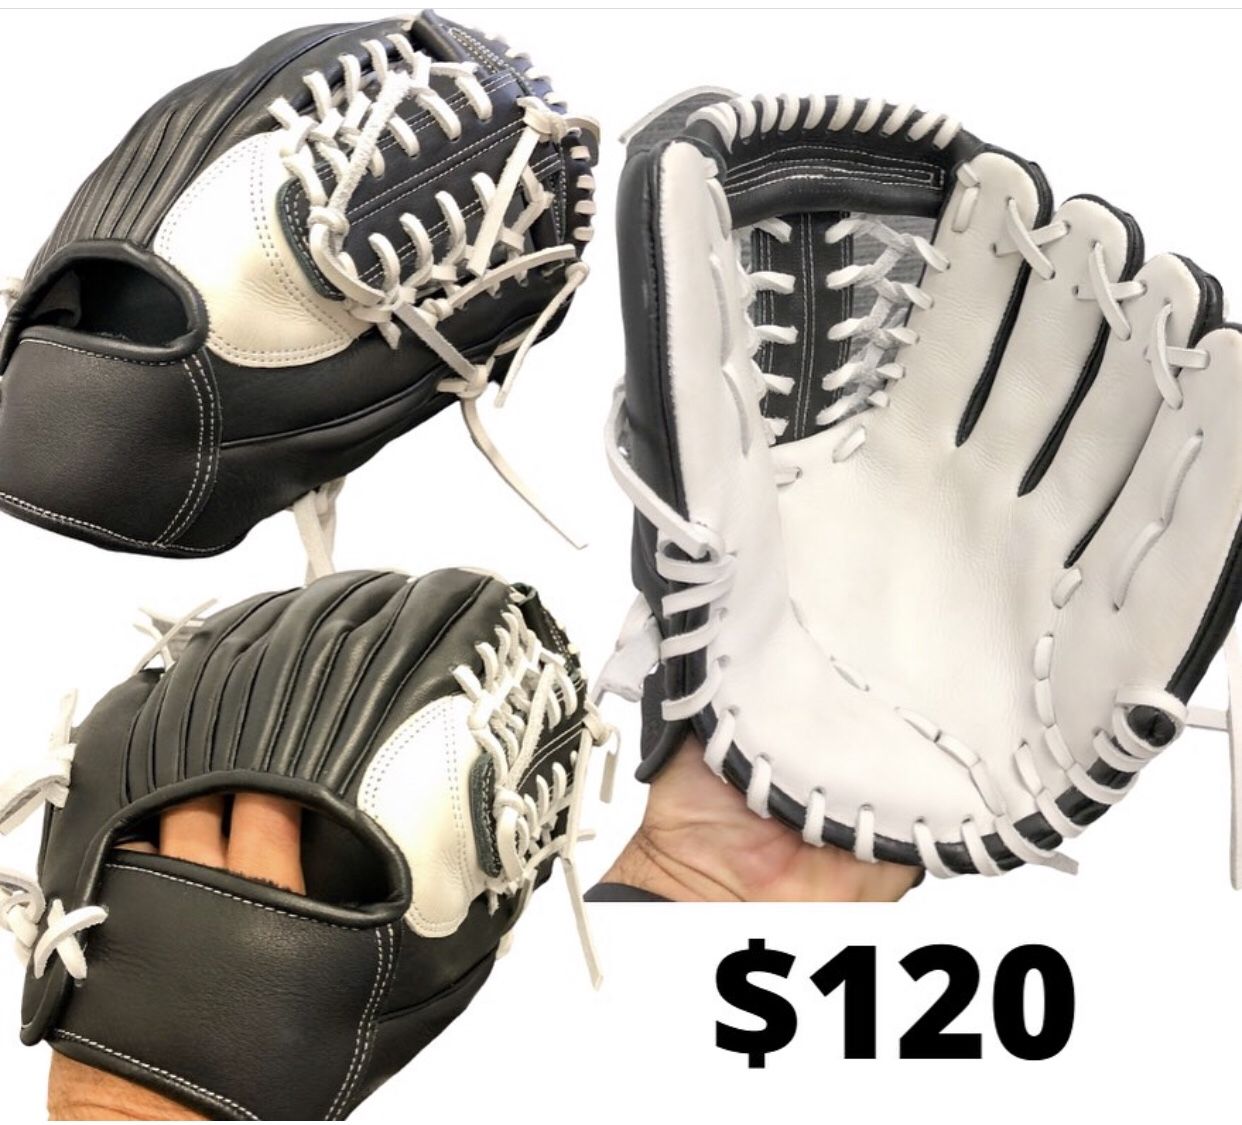 On demand custom baseball gloves. Unlimited.